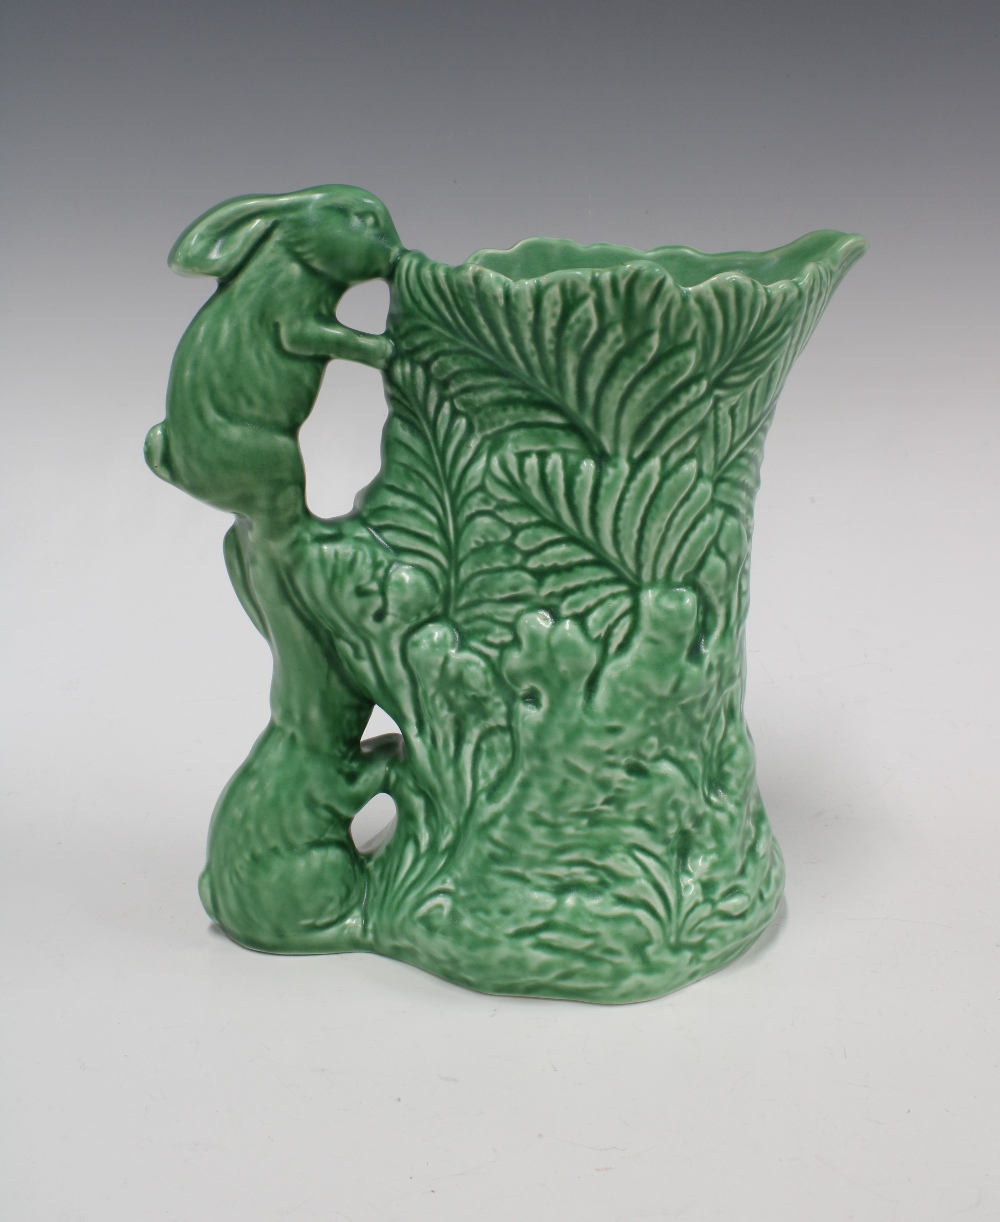 Sylvac green glazed moulded jug with rabbits handle, impressed marks and model number 1978, 22cm - Image 2 of 3